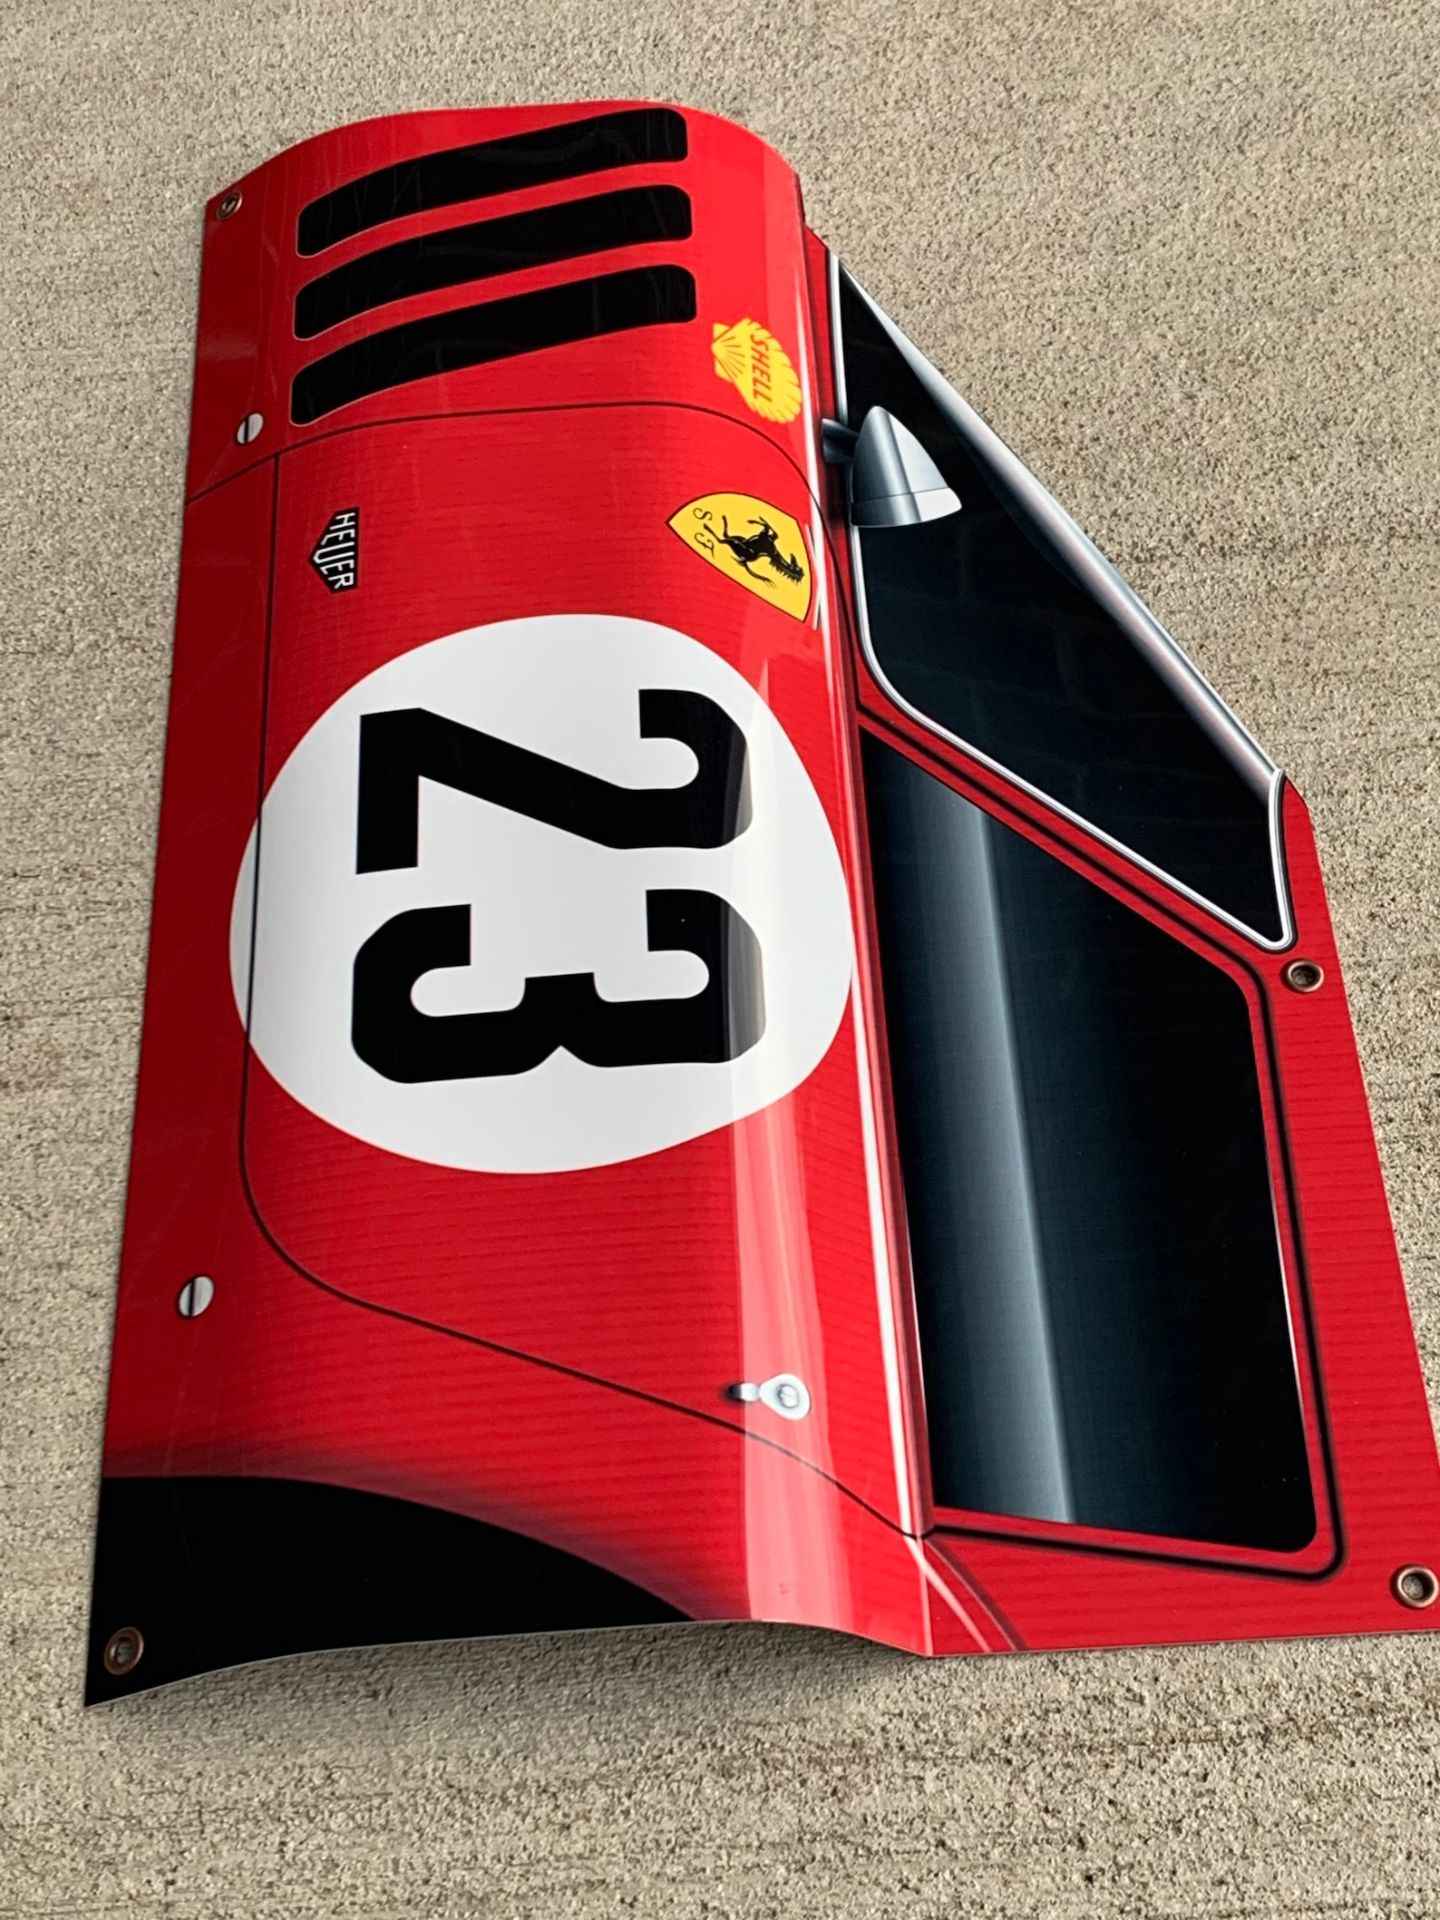 Ferrari 250 GTO Wall Display - Image 4 of 5